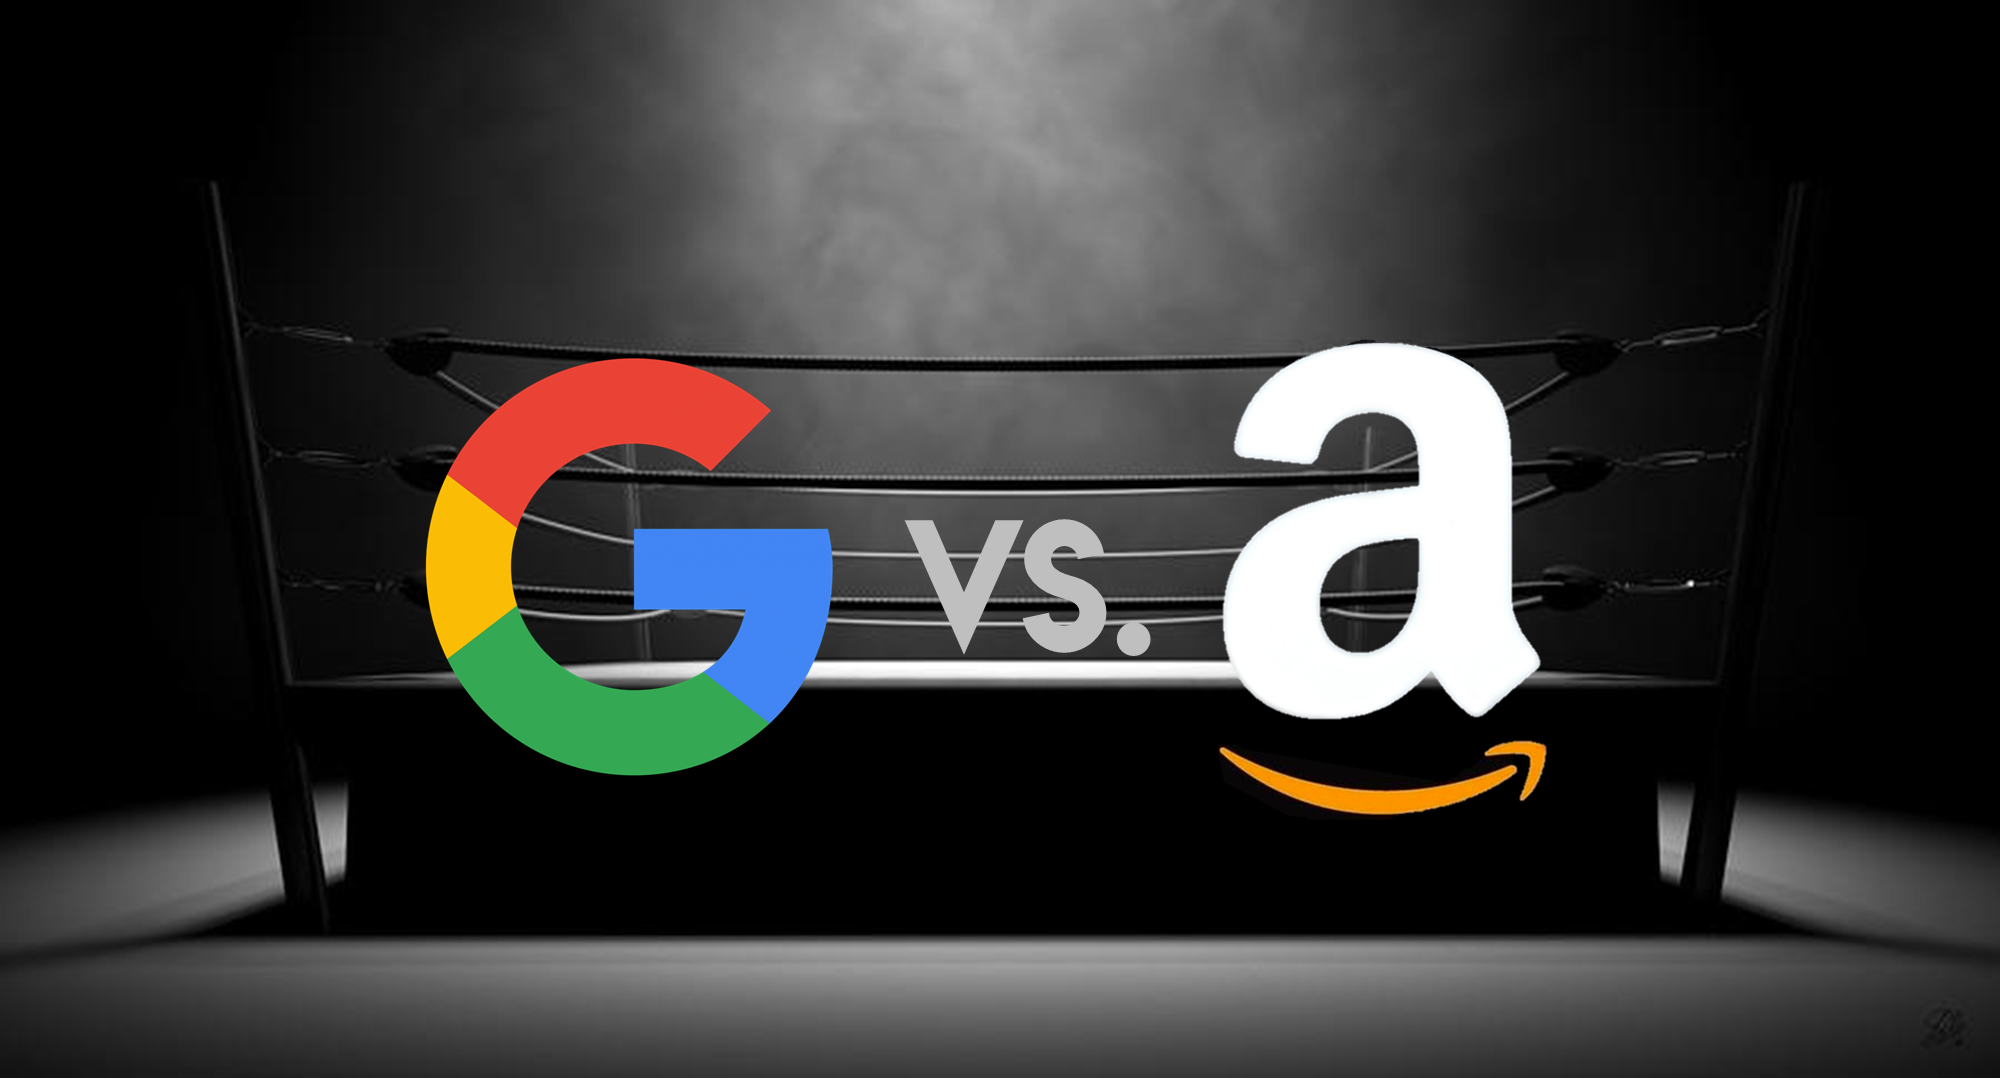 google vs amazon